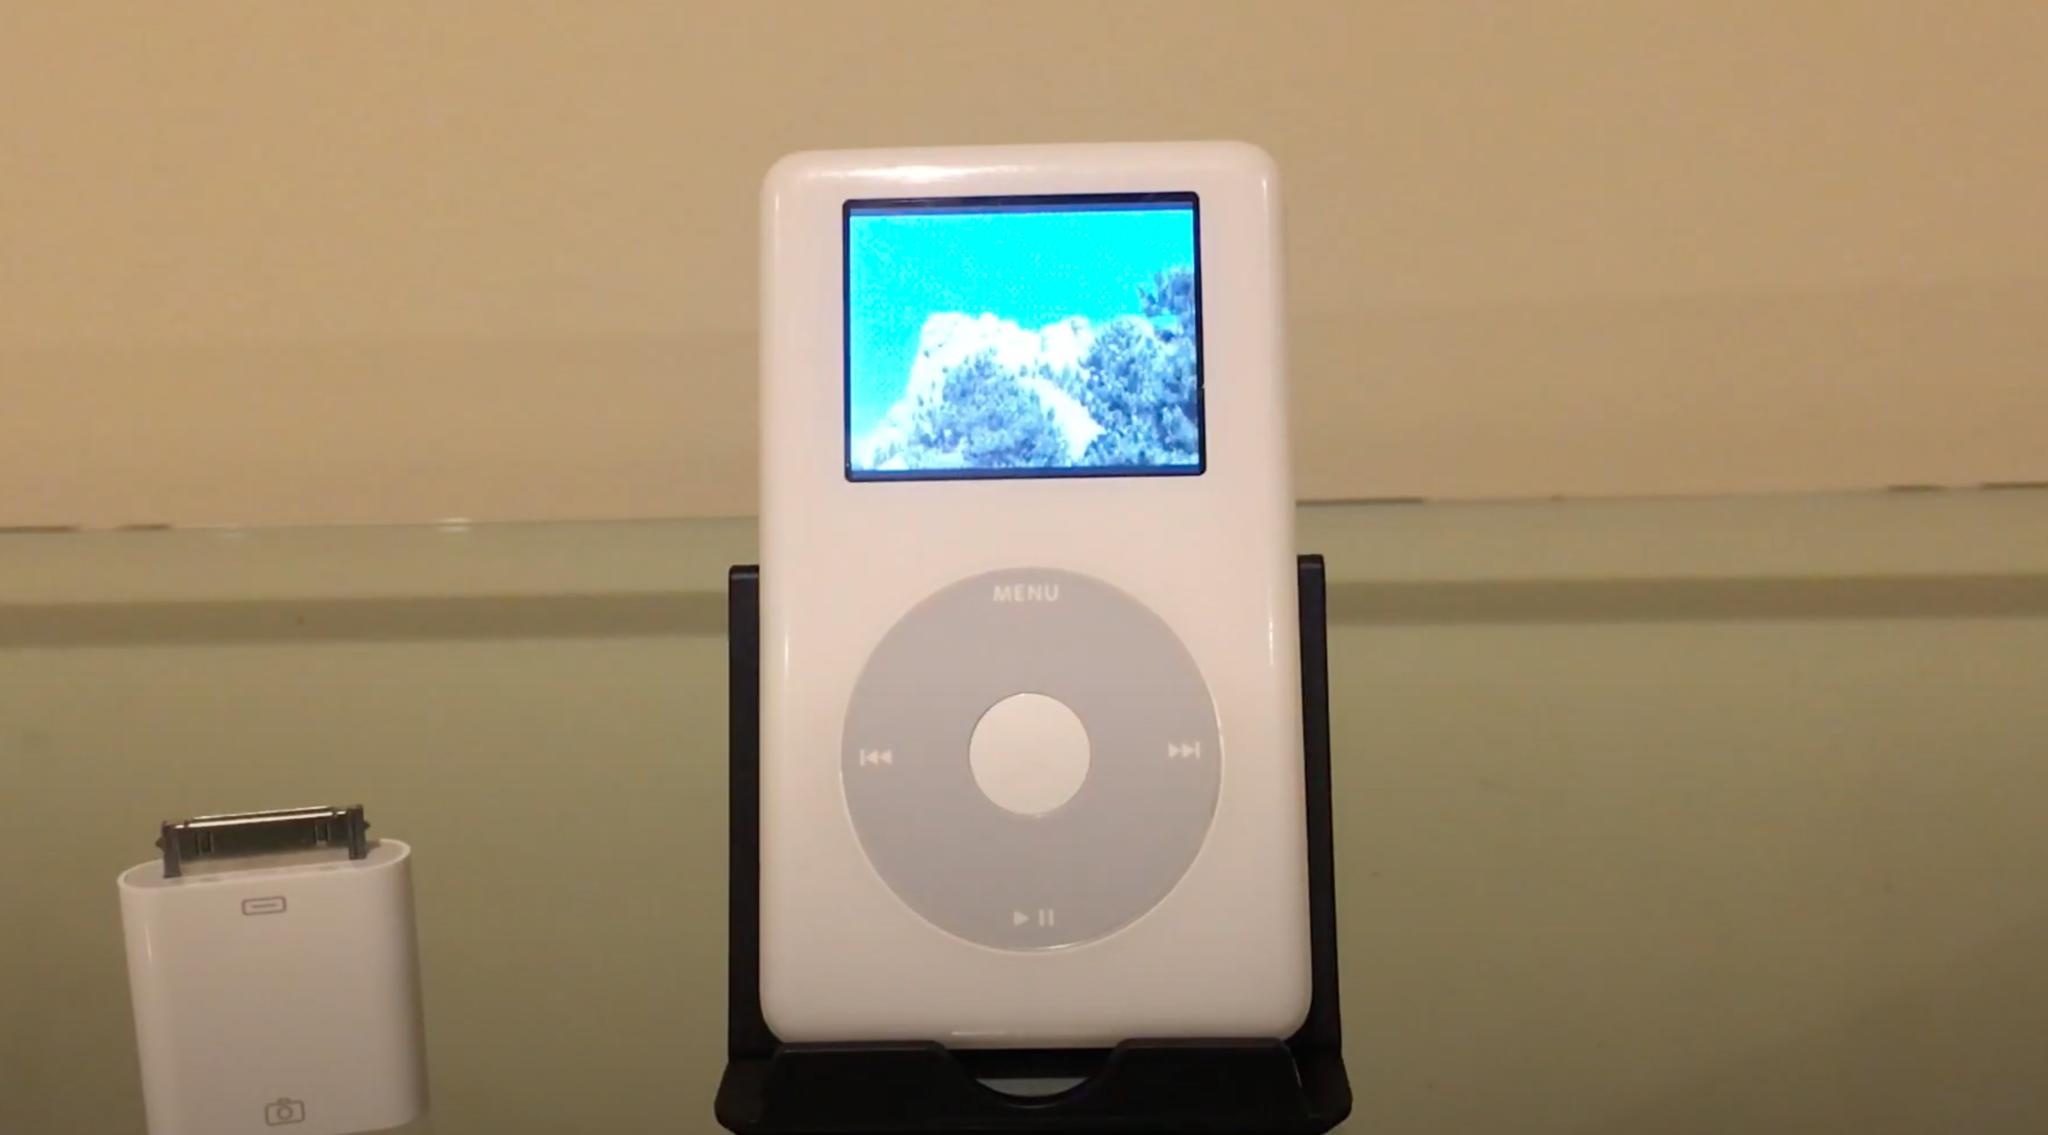 iPod Photo In Dock